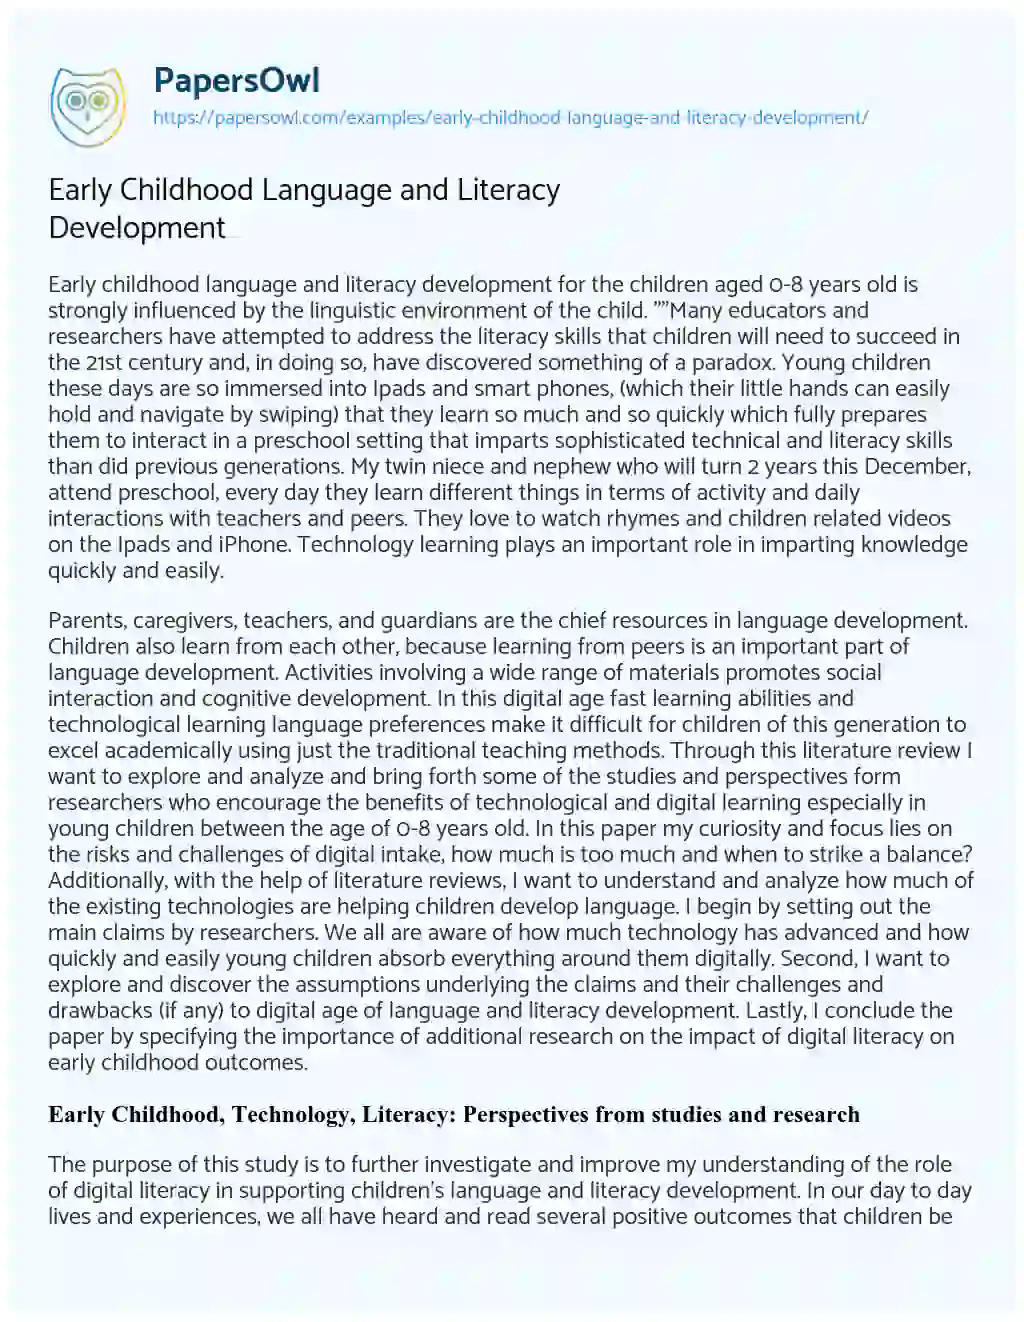 Early Childhood Language and Literacy Development essay